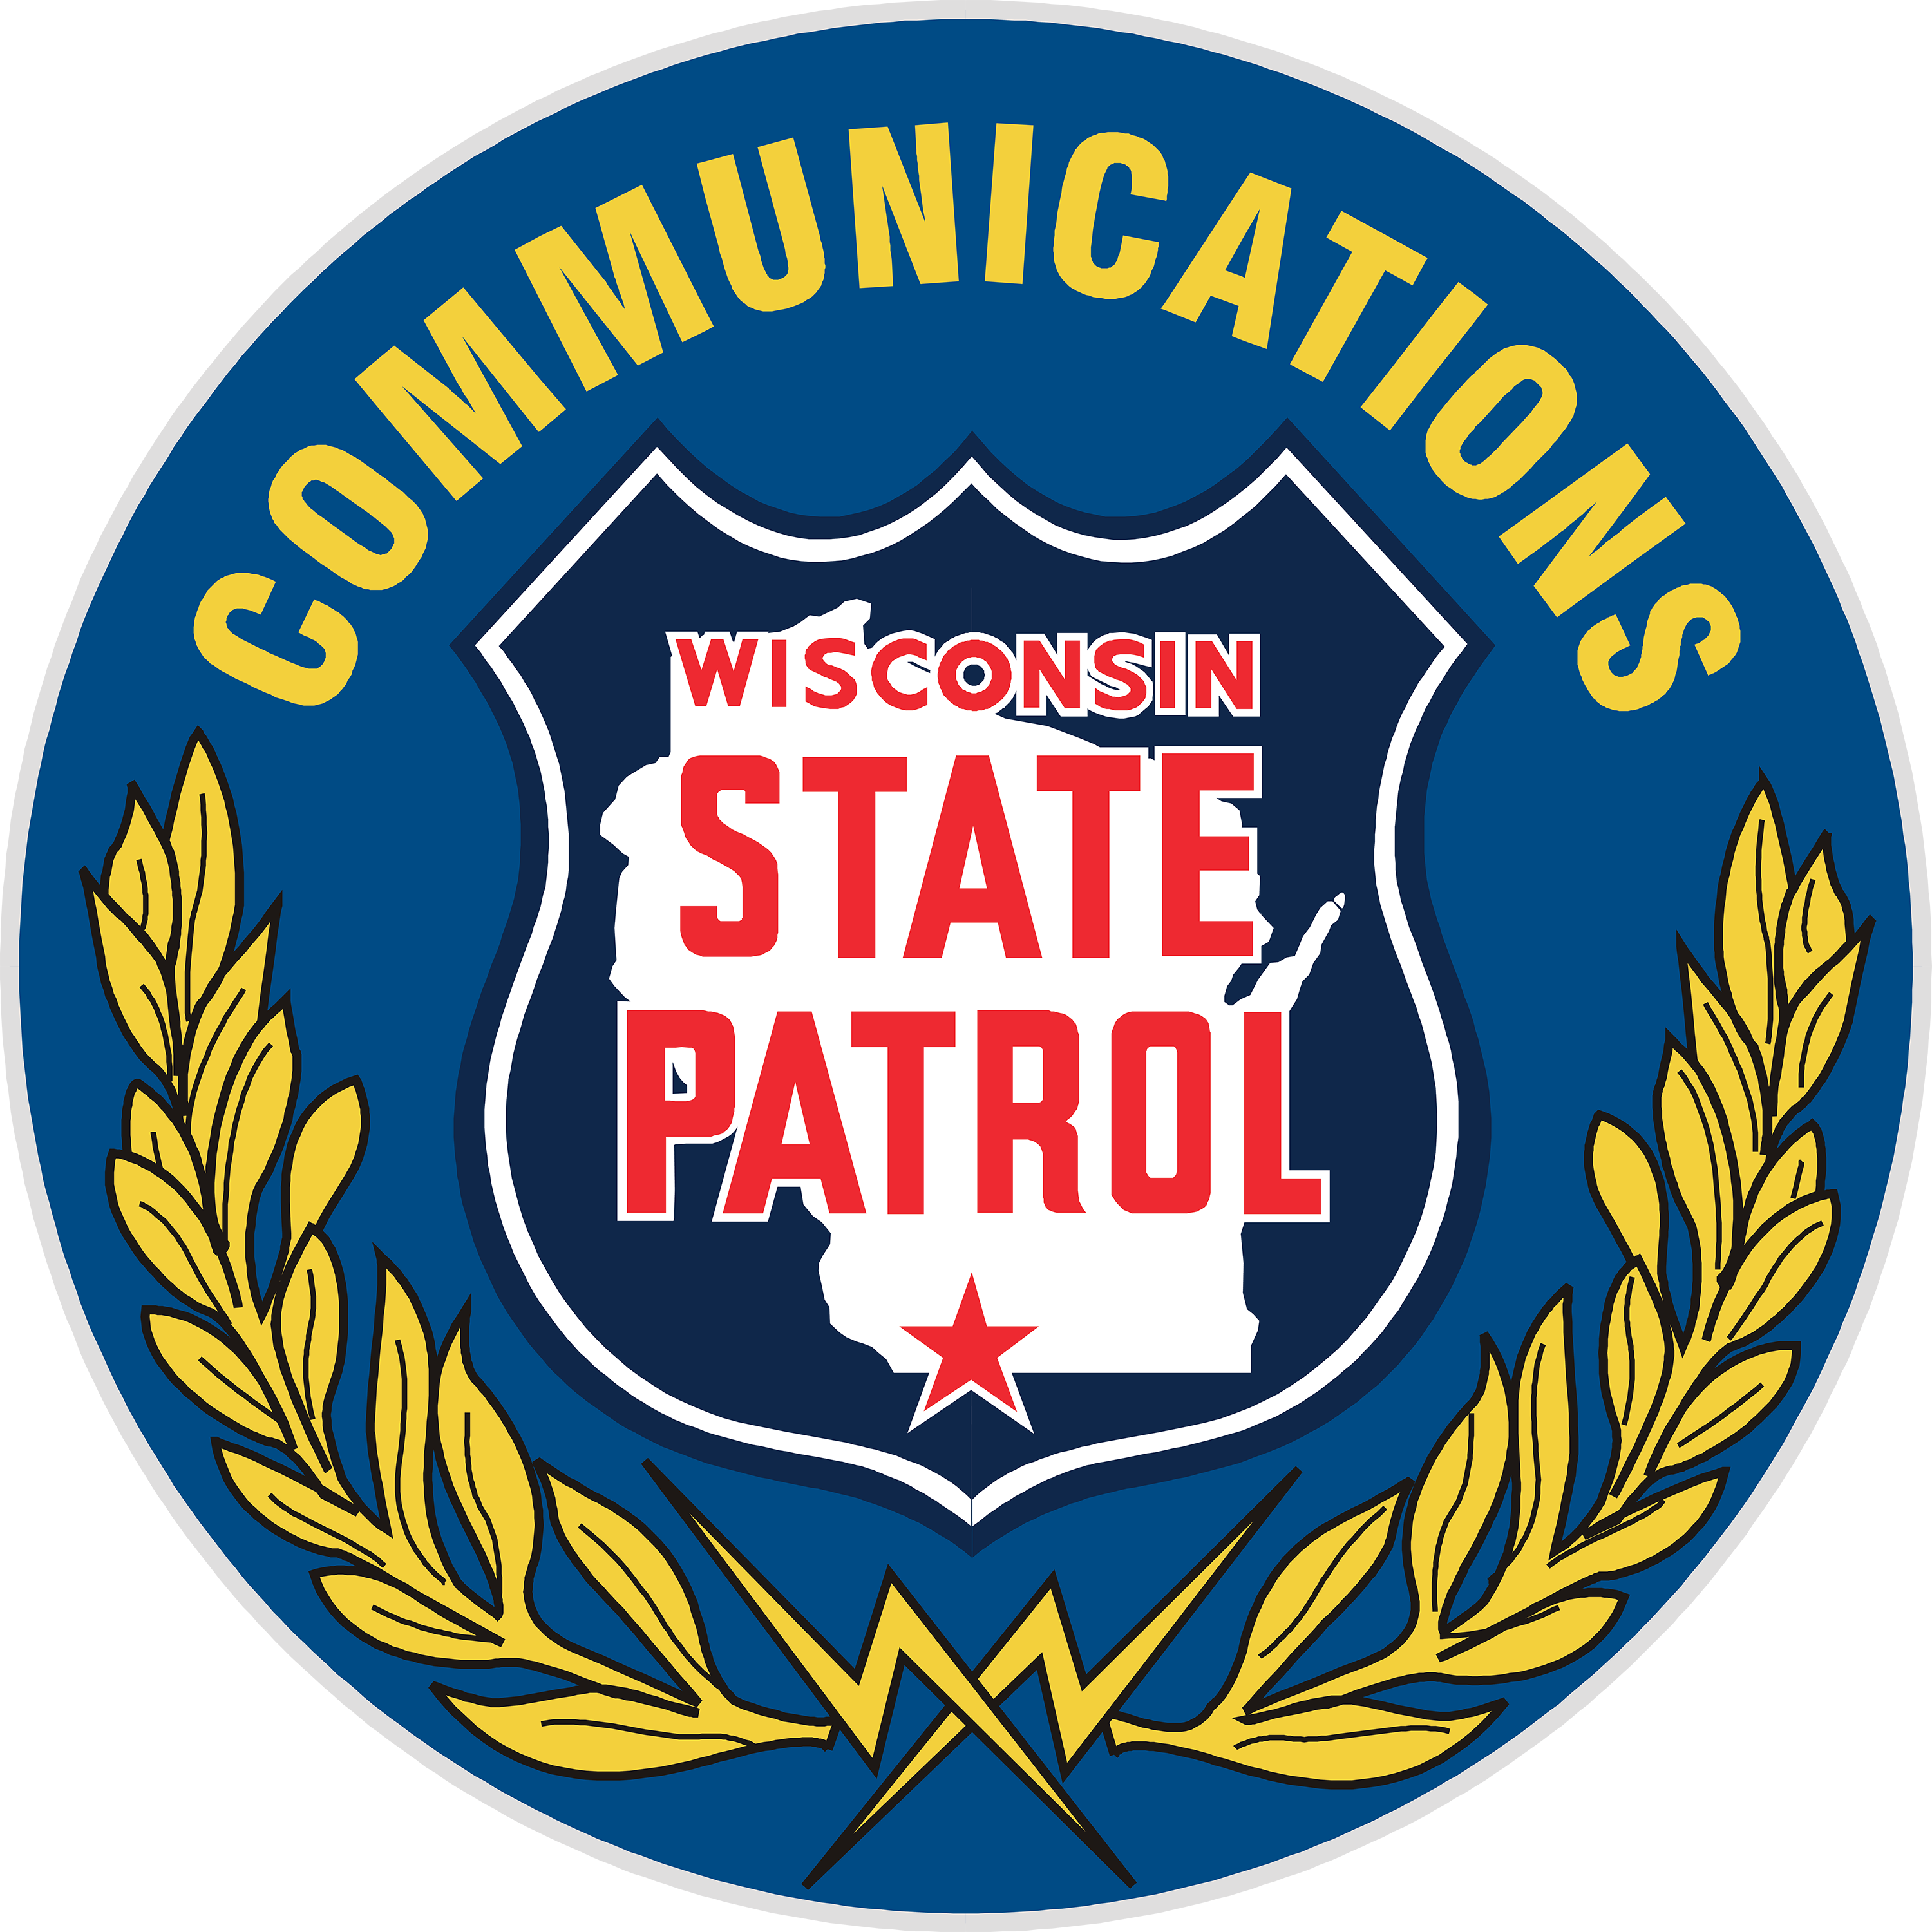 dsp-communications-unit-logo.png